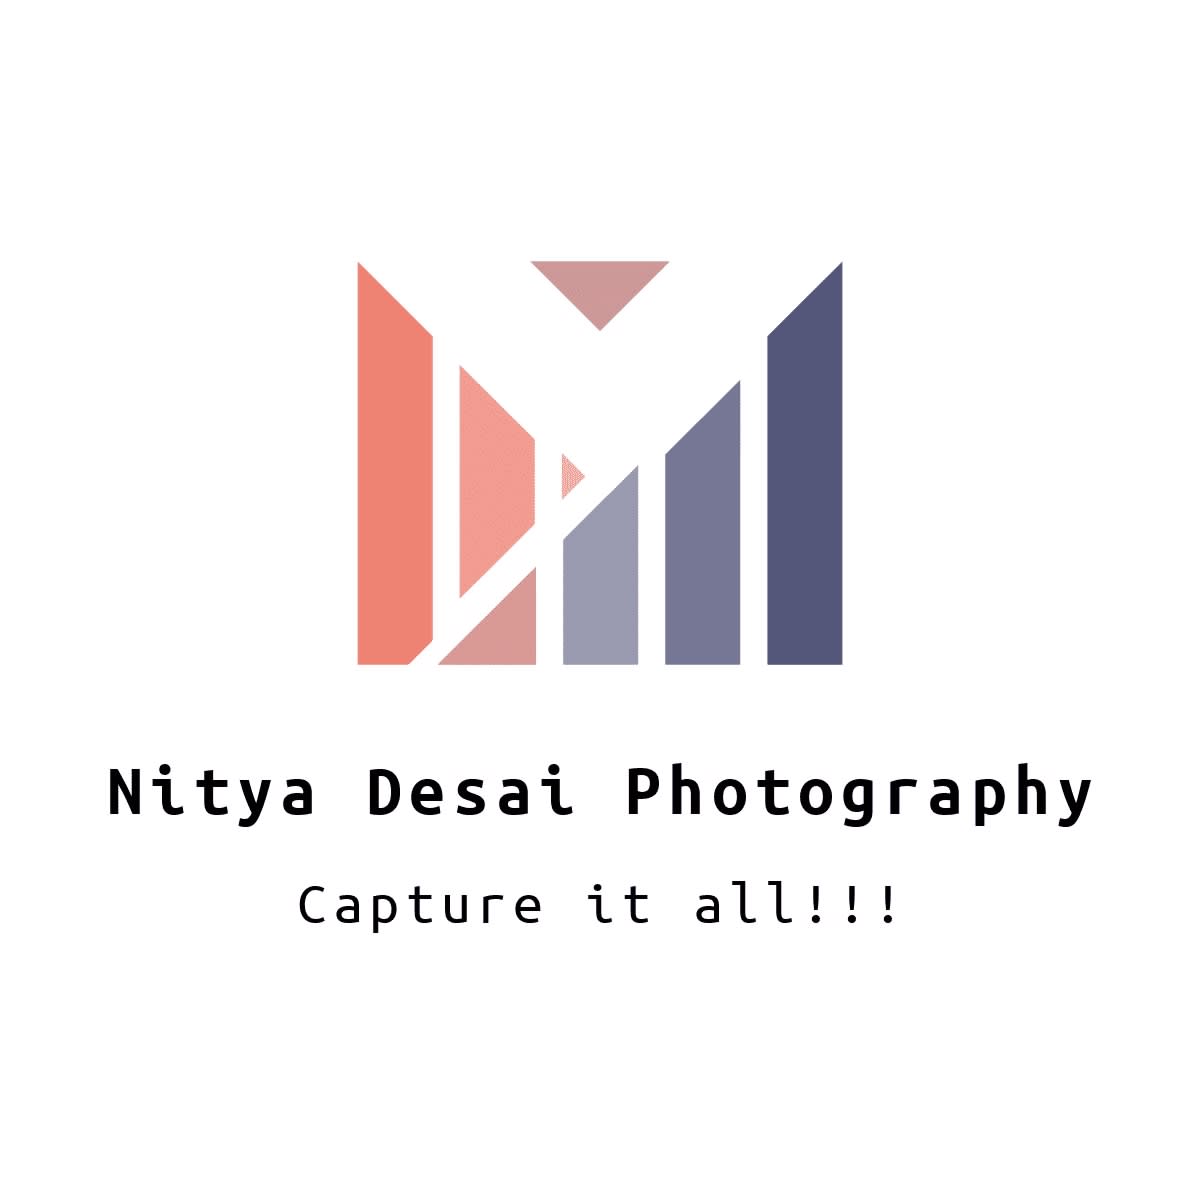 Nitya Desai Photography